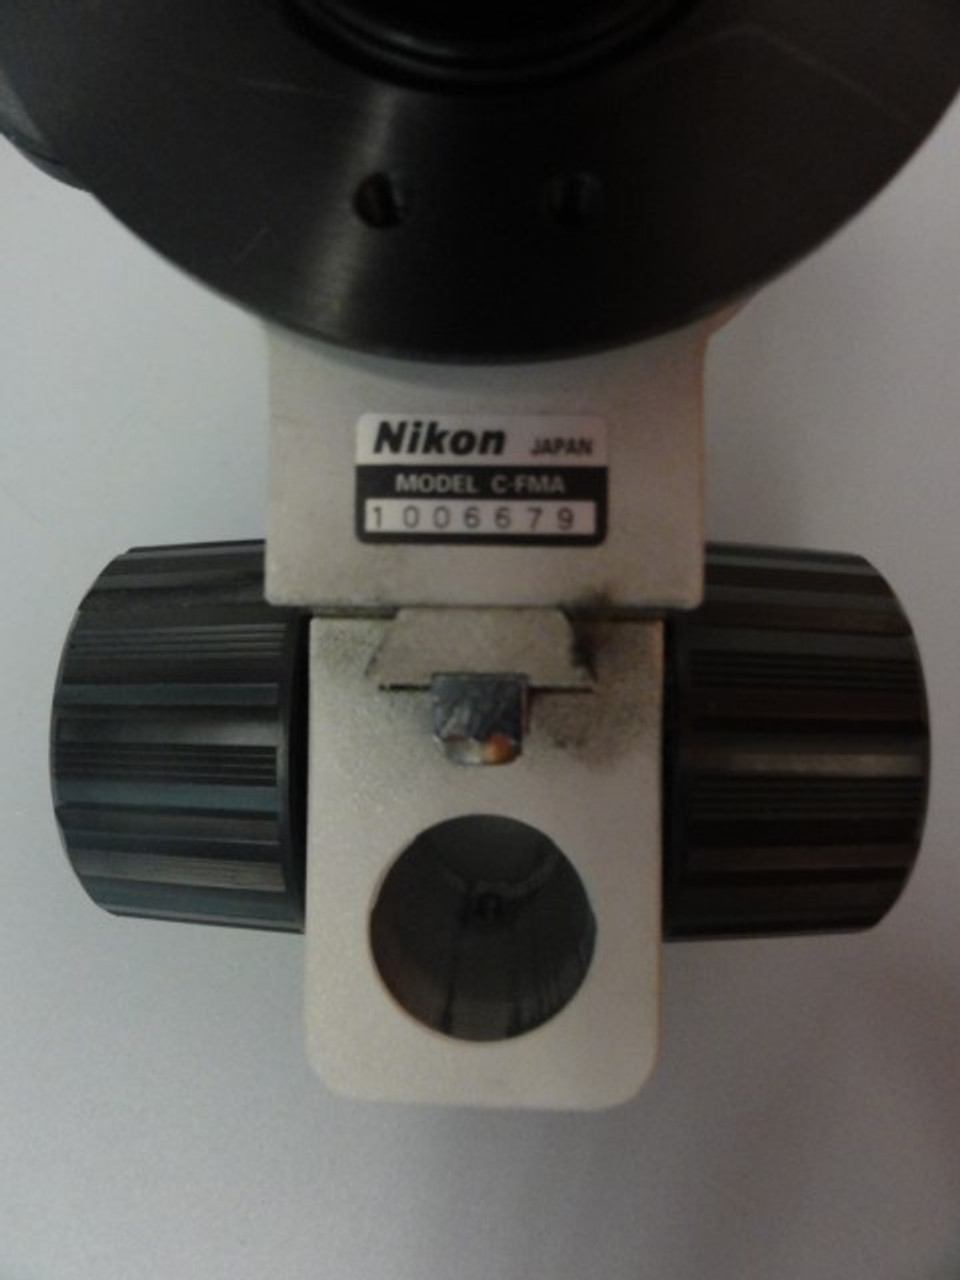 Navitar TenX 1-50018 1x Nira Adapter w/ Navitar 1-50269 Optical Zoom Lens and Nikon C-FMA Focus Mount